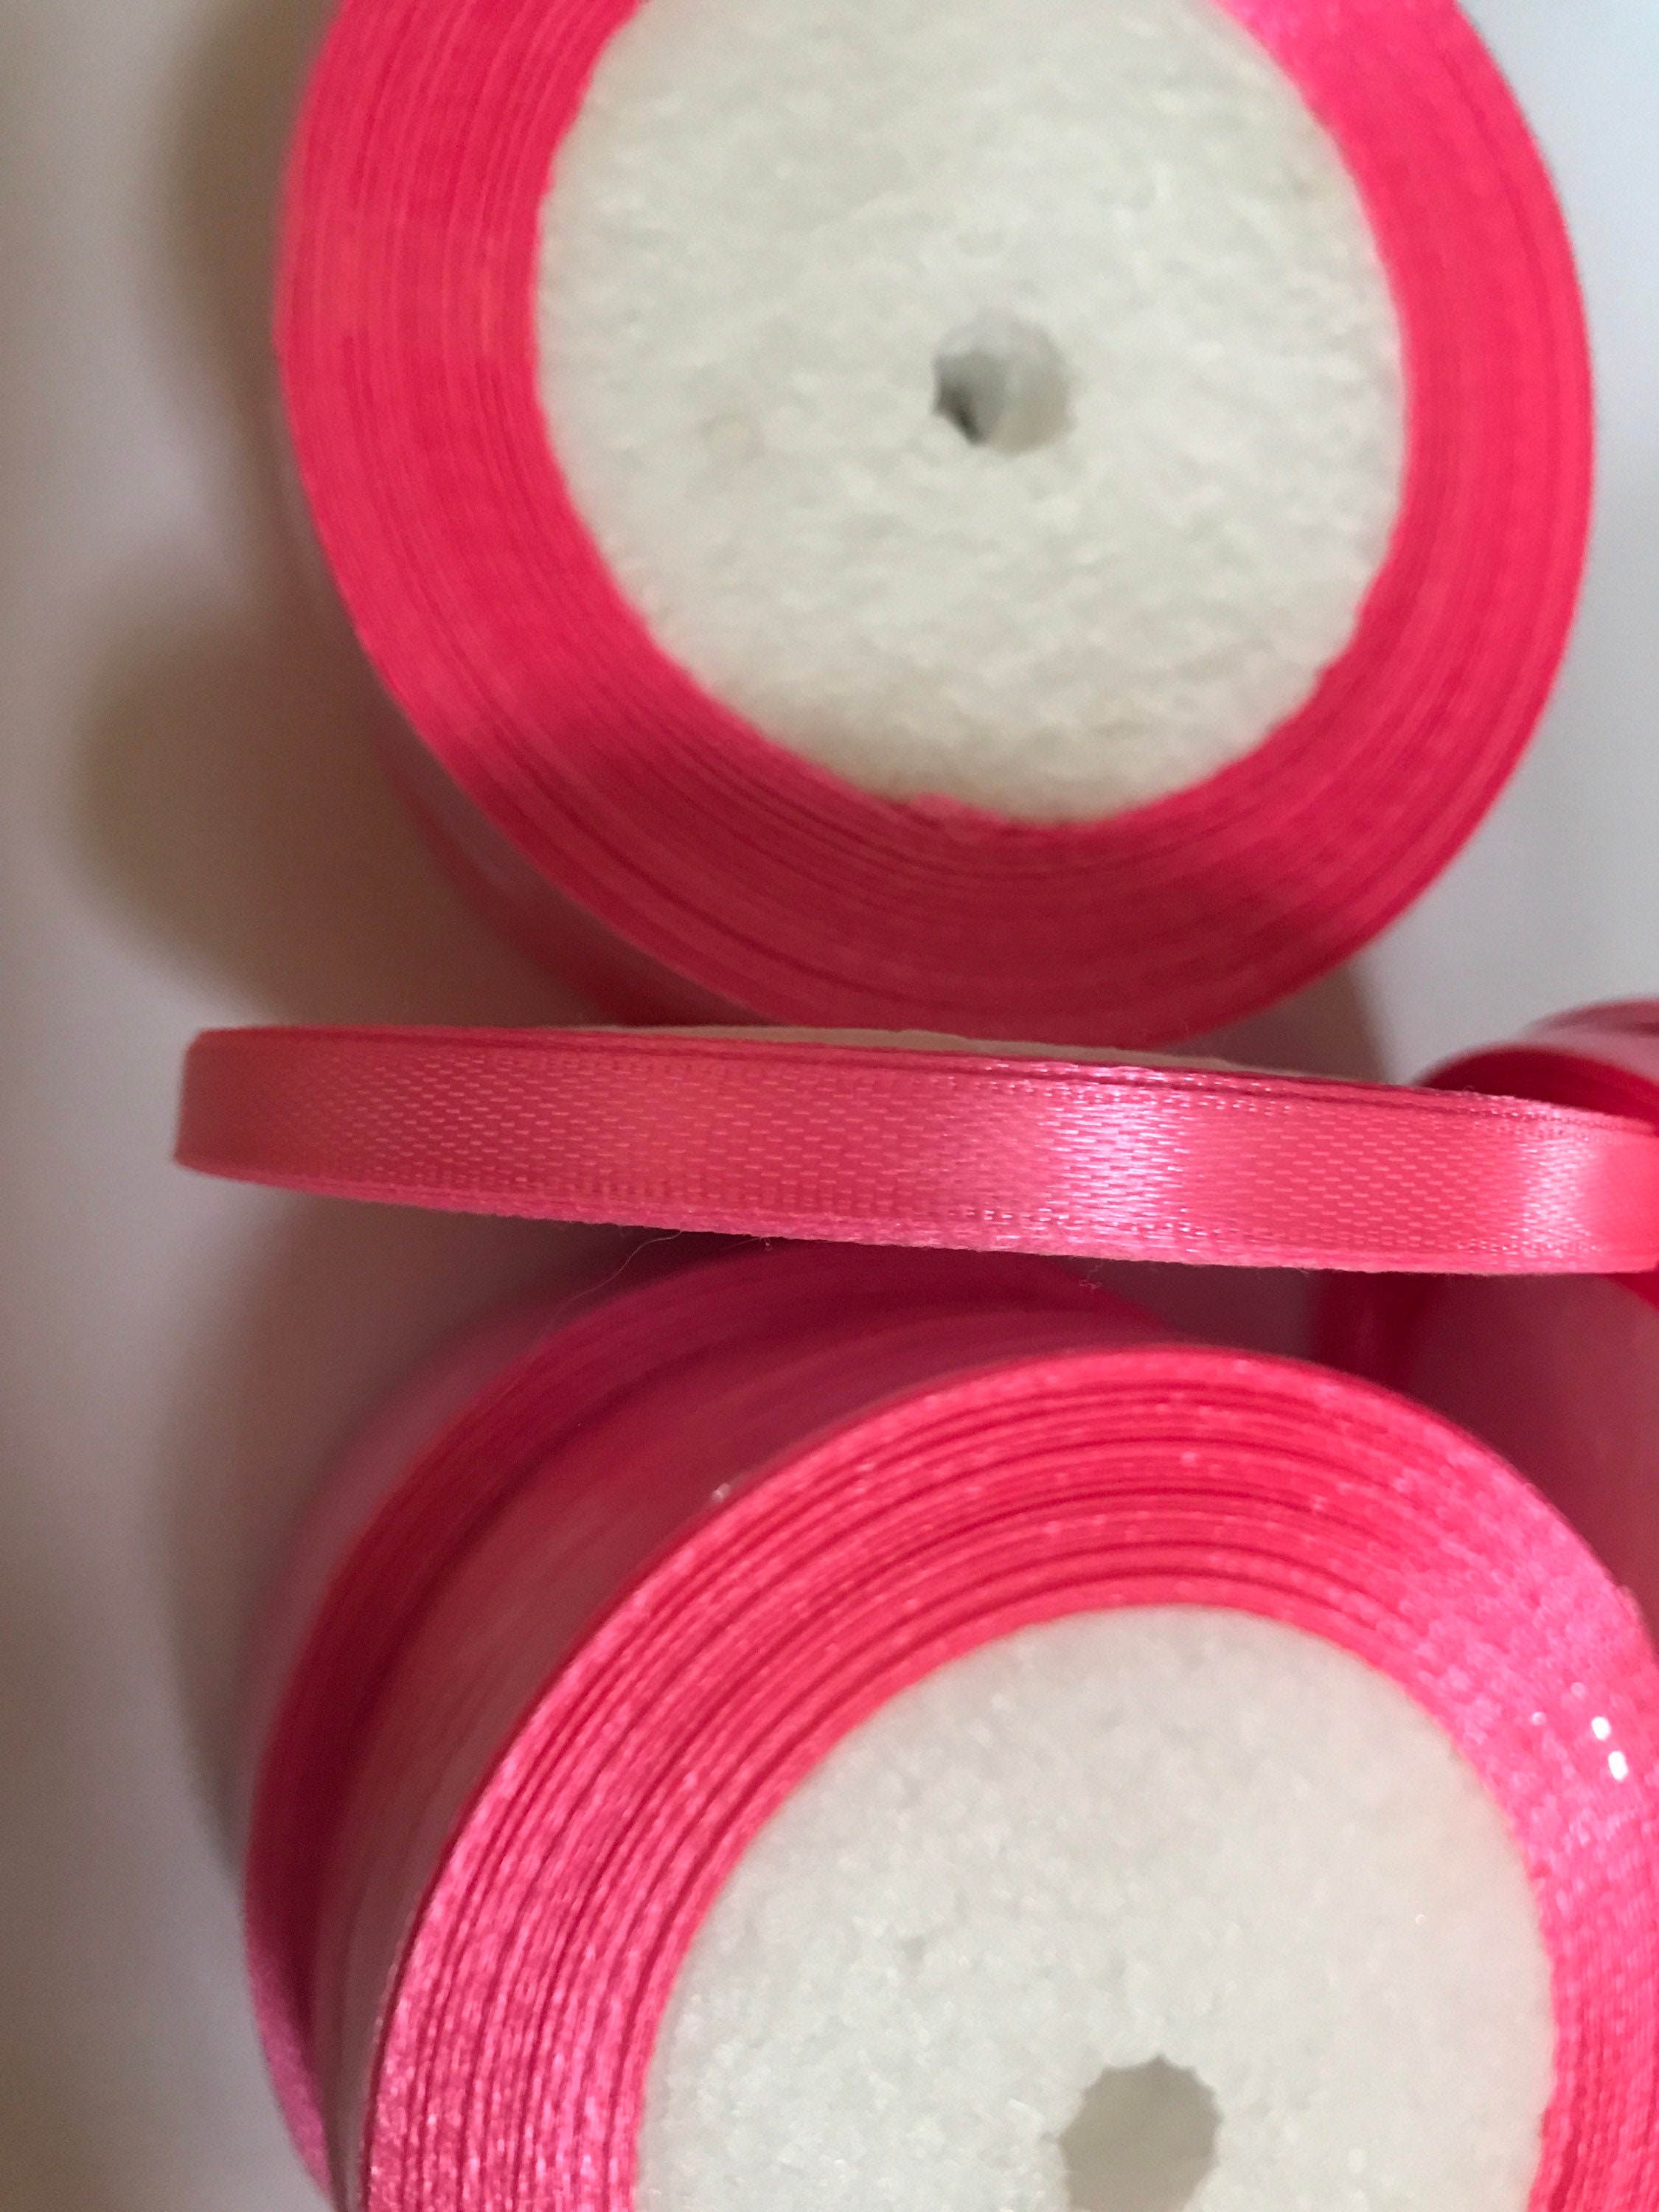 Bright Pink Ribbon Shocking Pink Satin Ribbon 1/8 Inch Width Double Faced  100 Yard Spool gi18satribbonshockingpink 